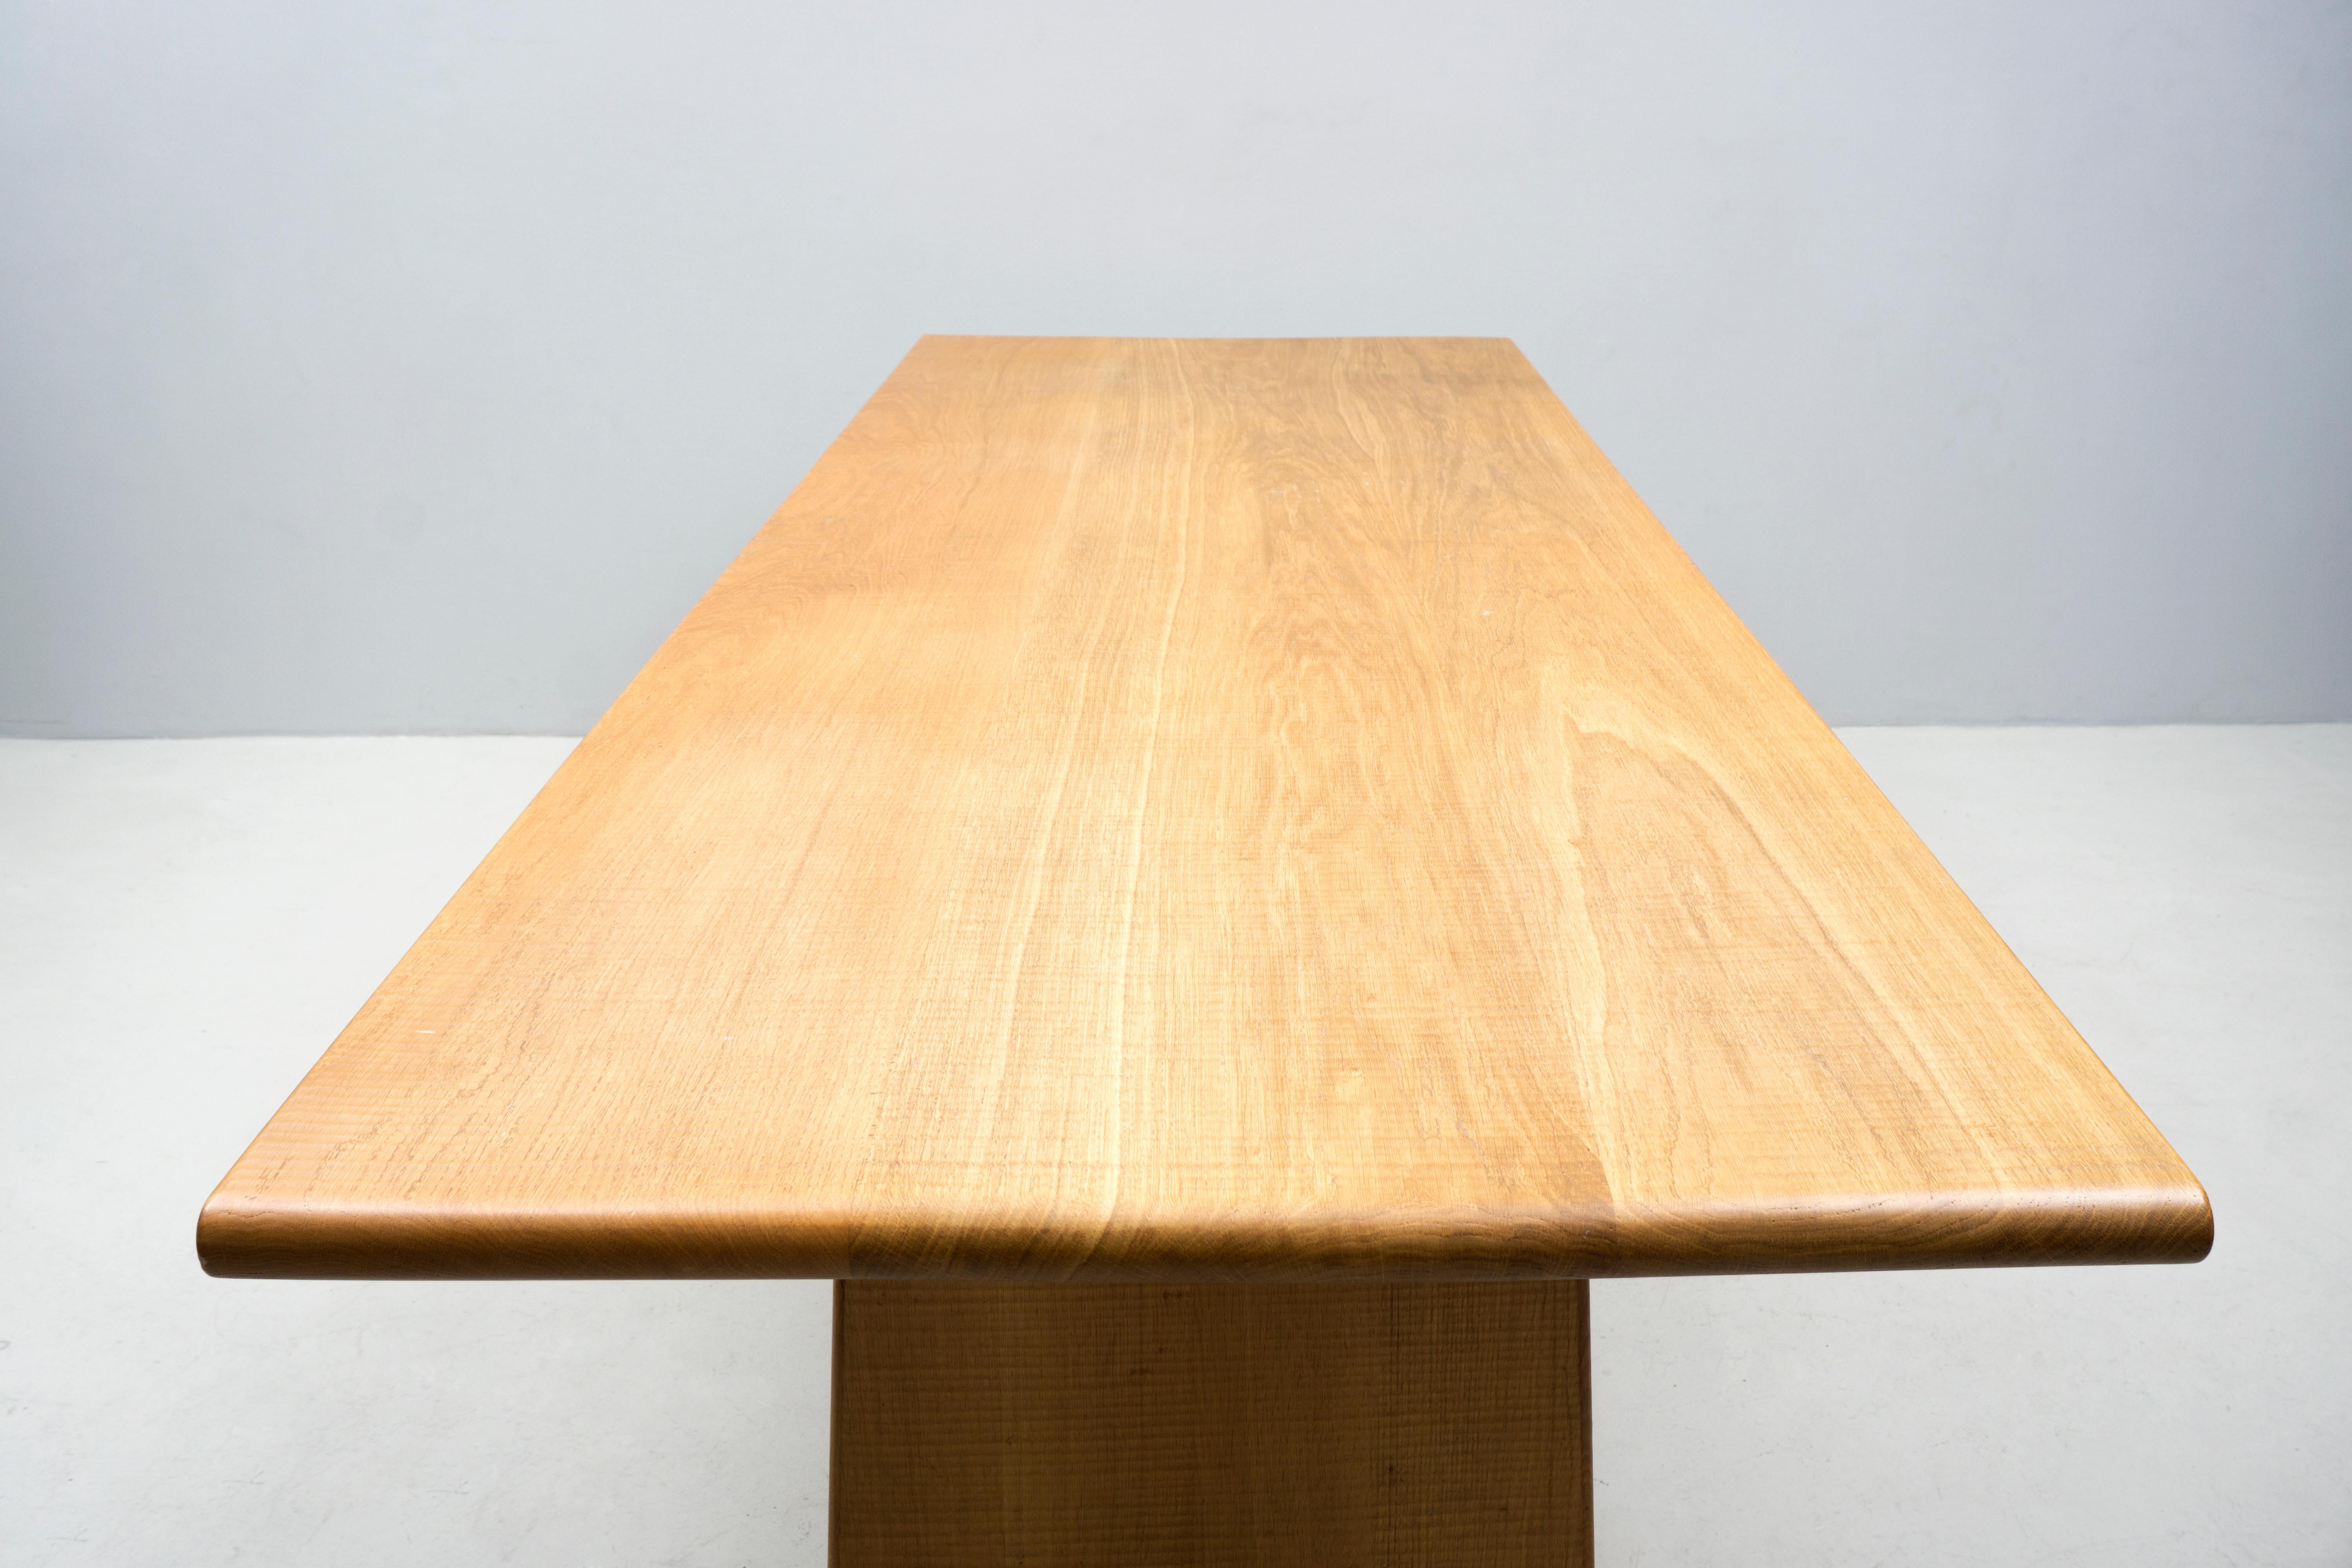 Late 20th Century Oak Table by Giuseppe Rivadossi, Brescia, Italy Around 1975